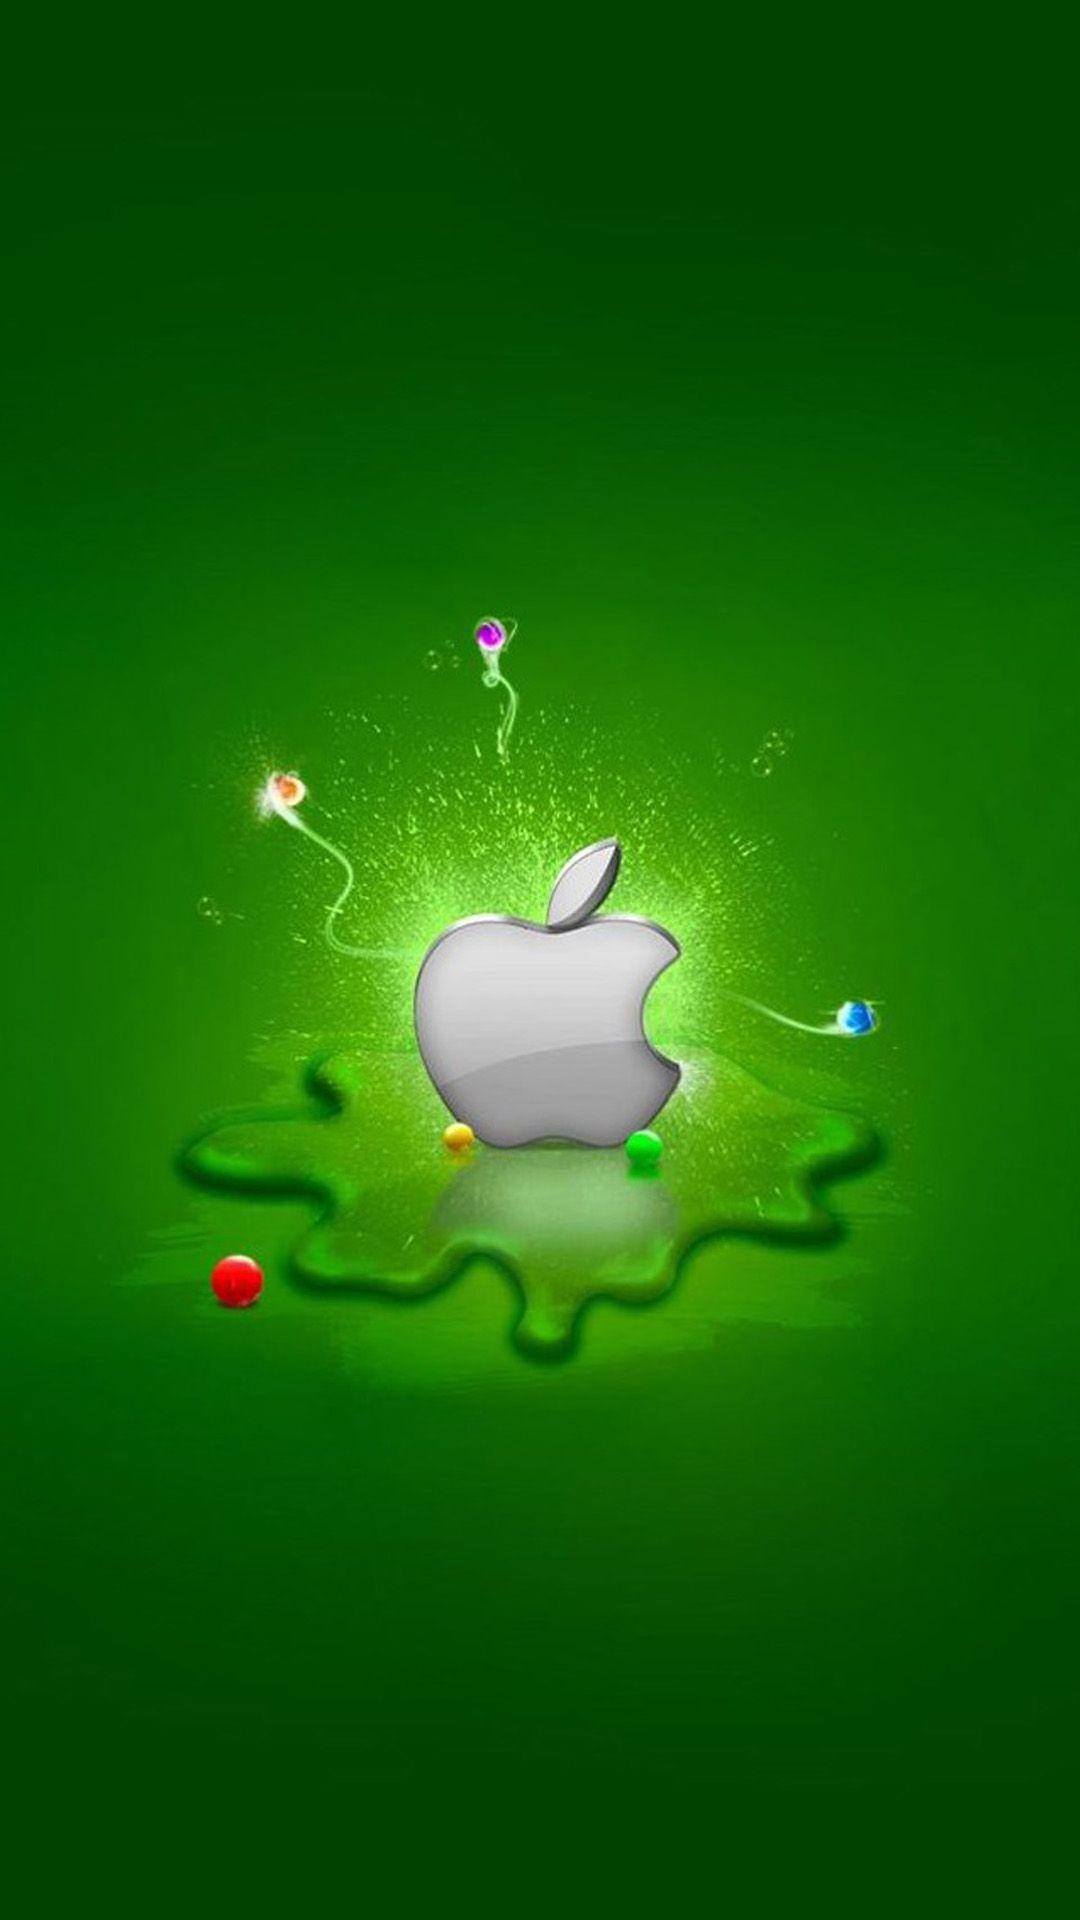 Apple iPhone Image